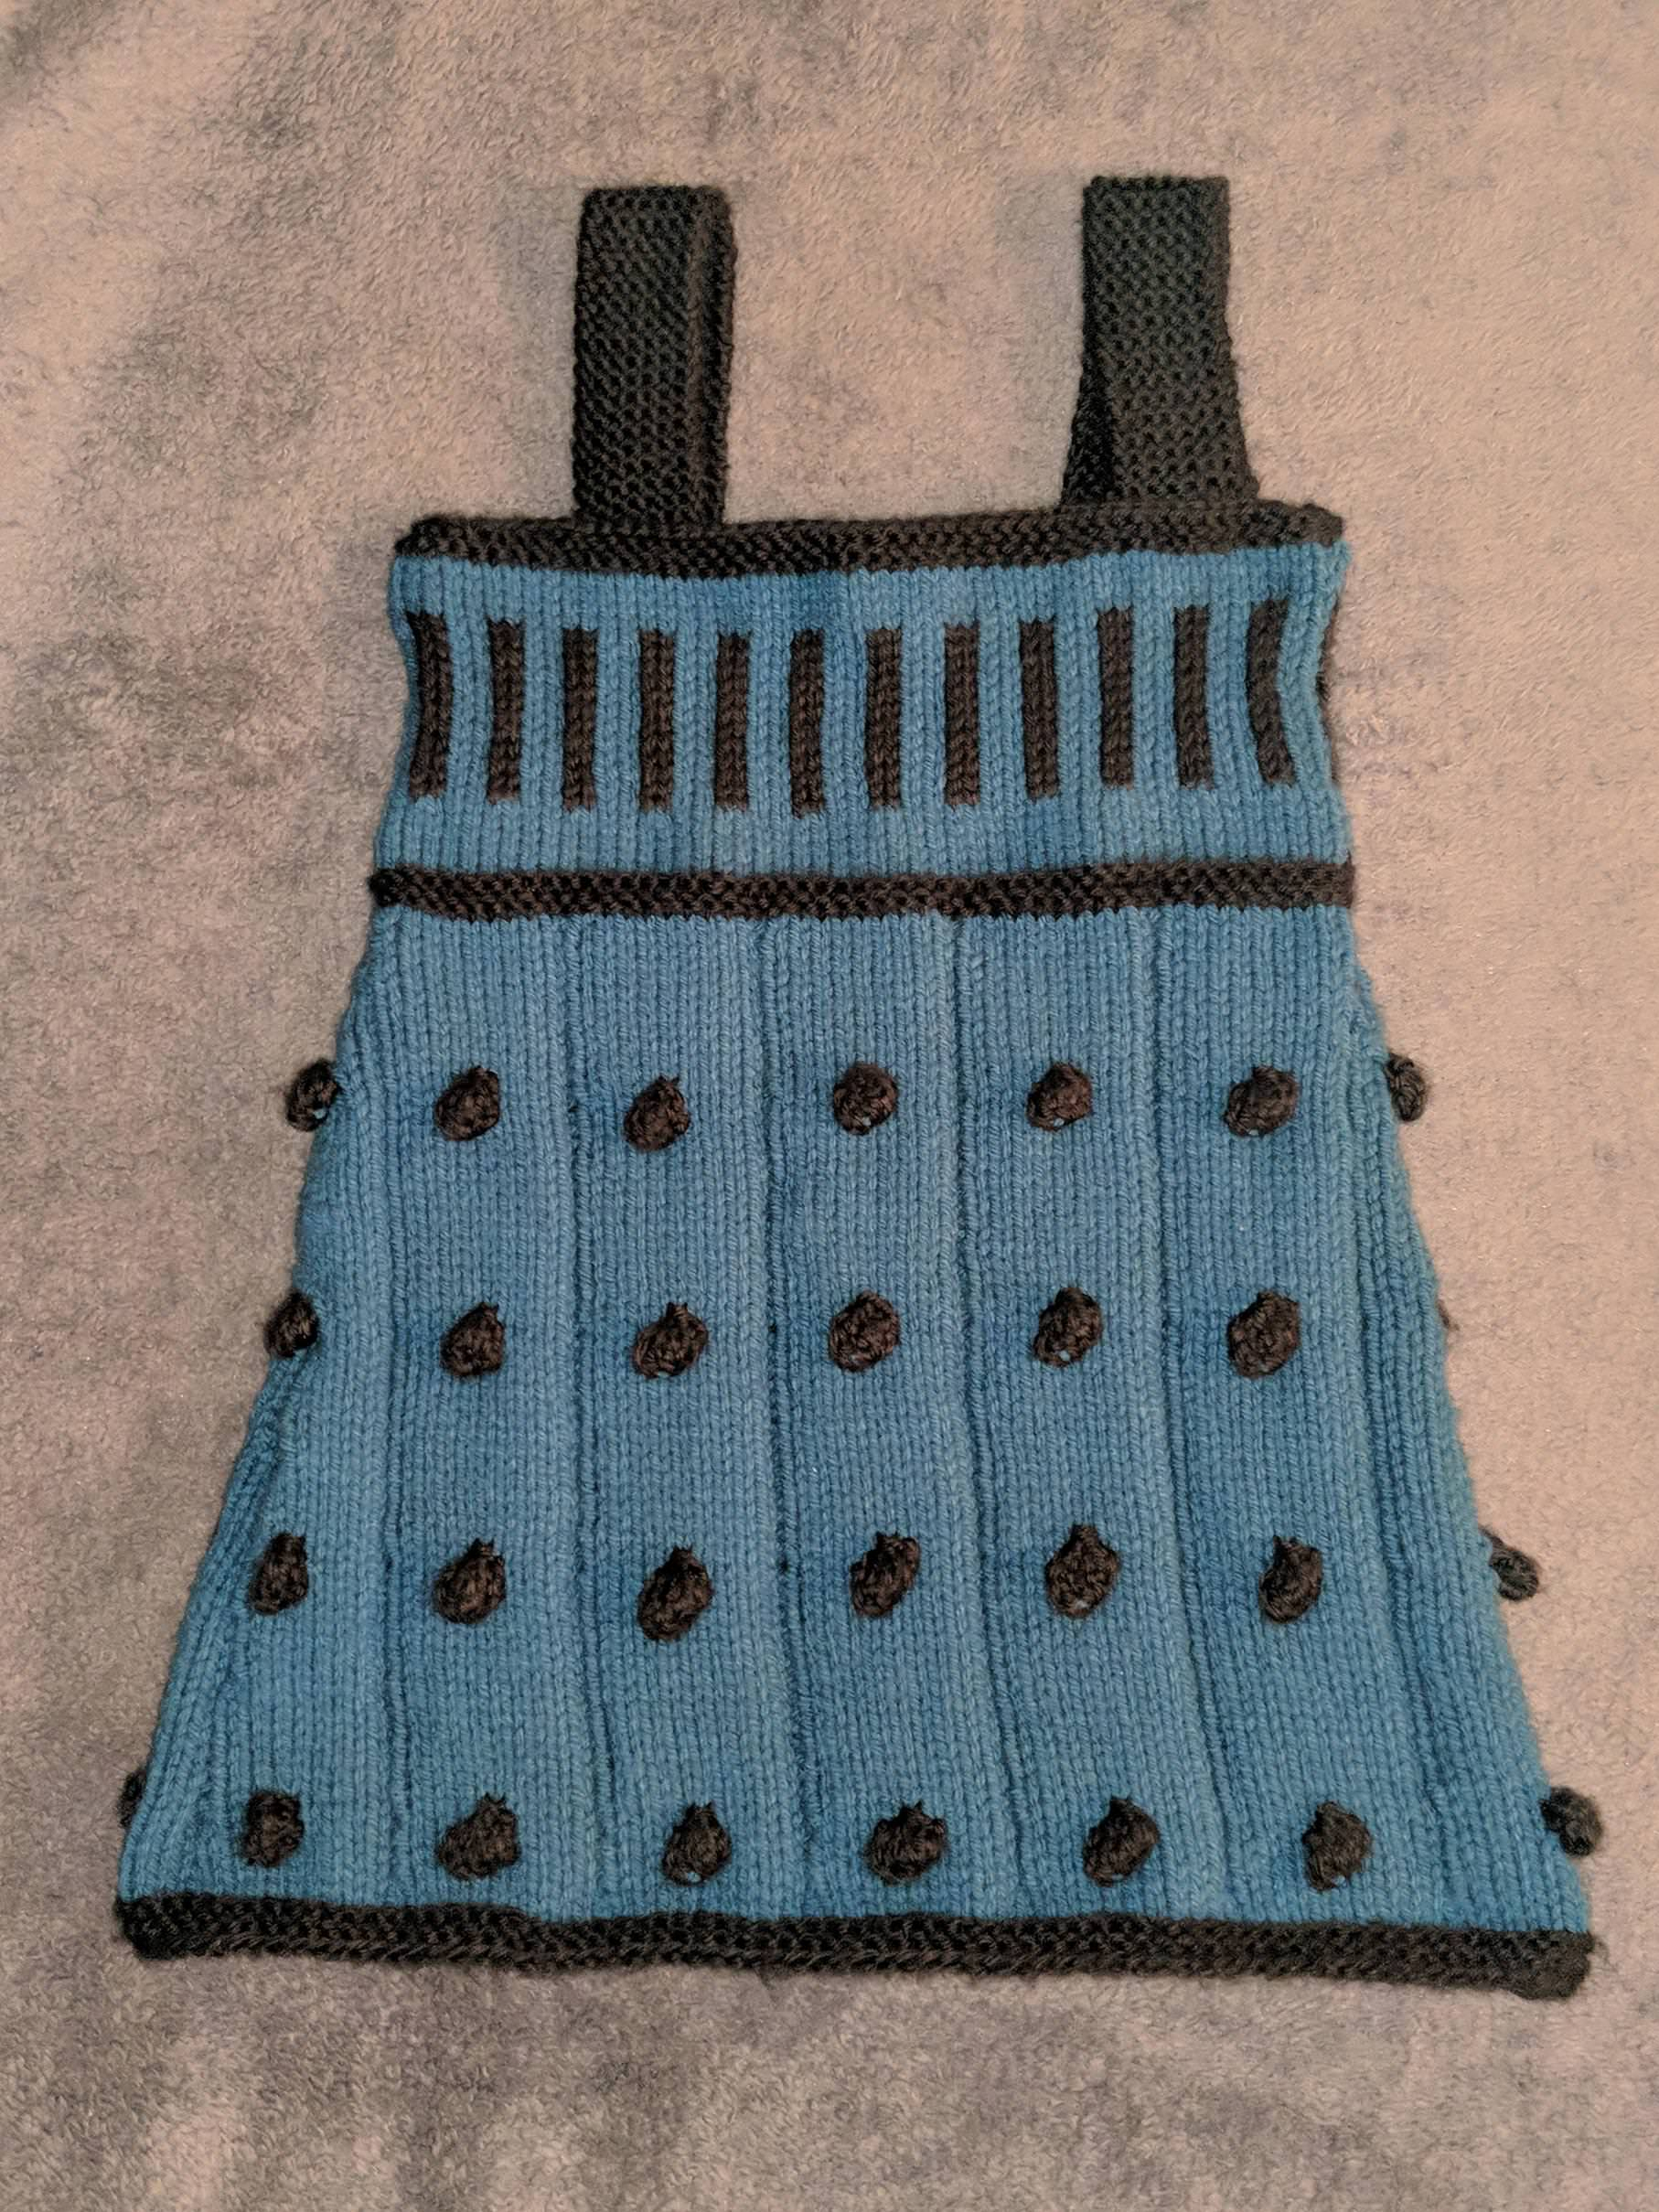 Knitted Dalek Pattern Fo Dalek Dress Knitting